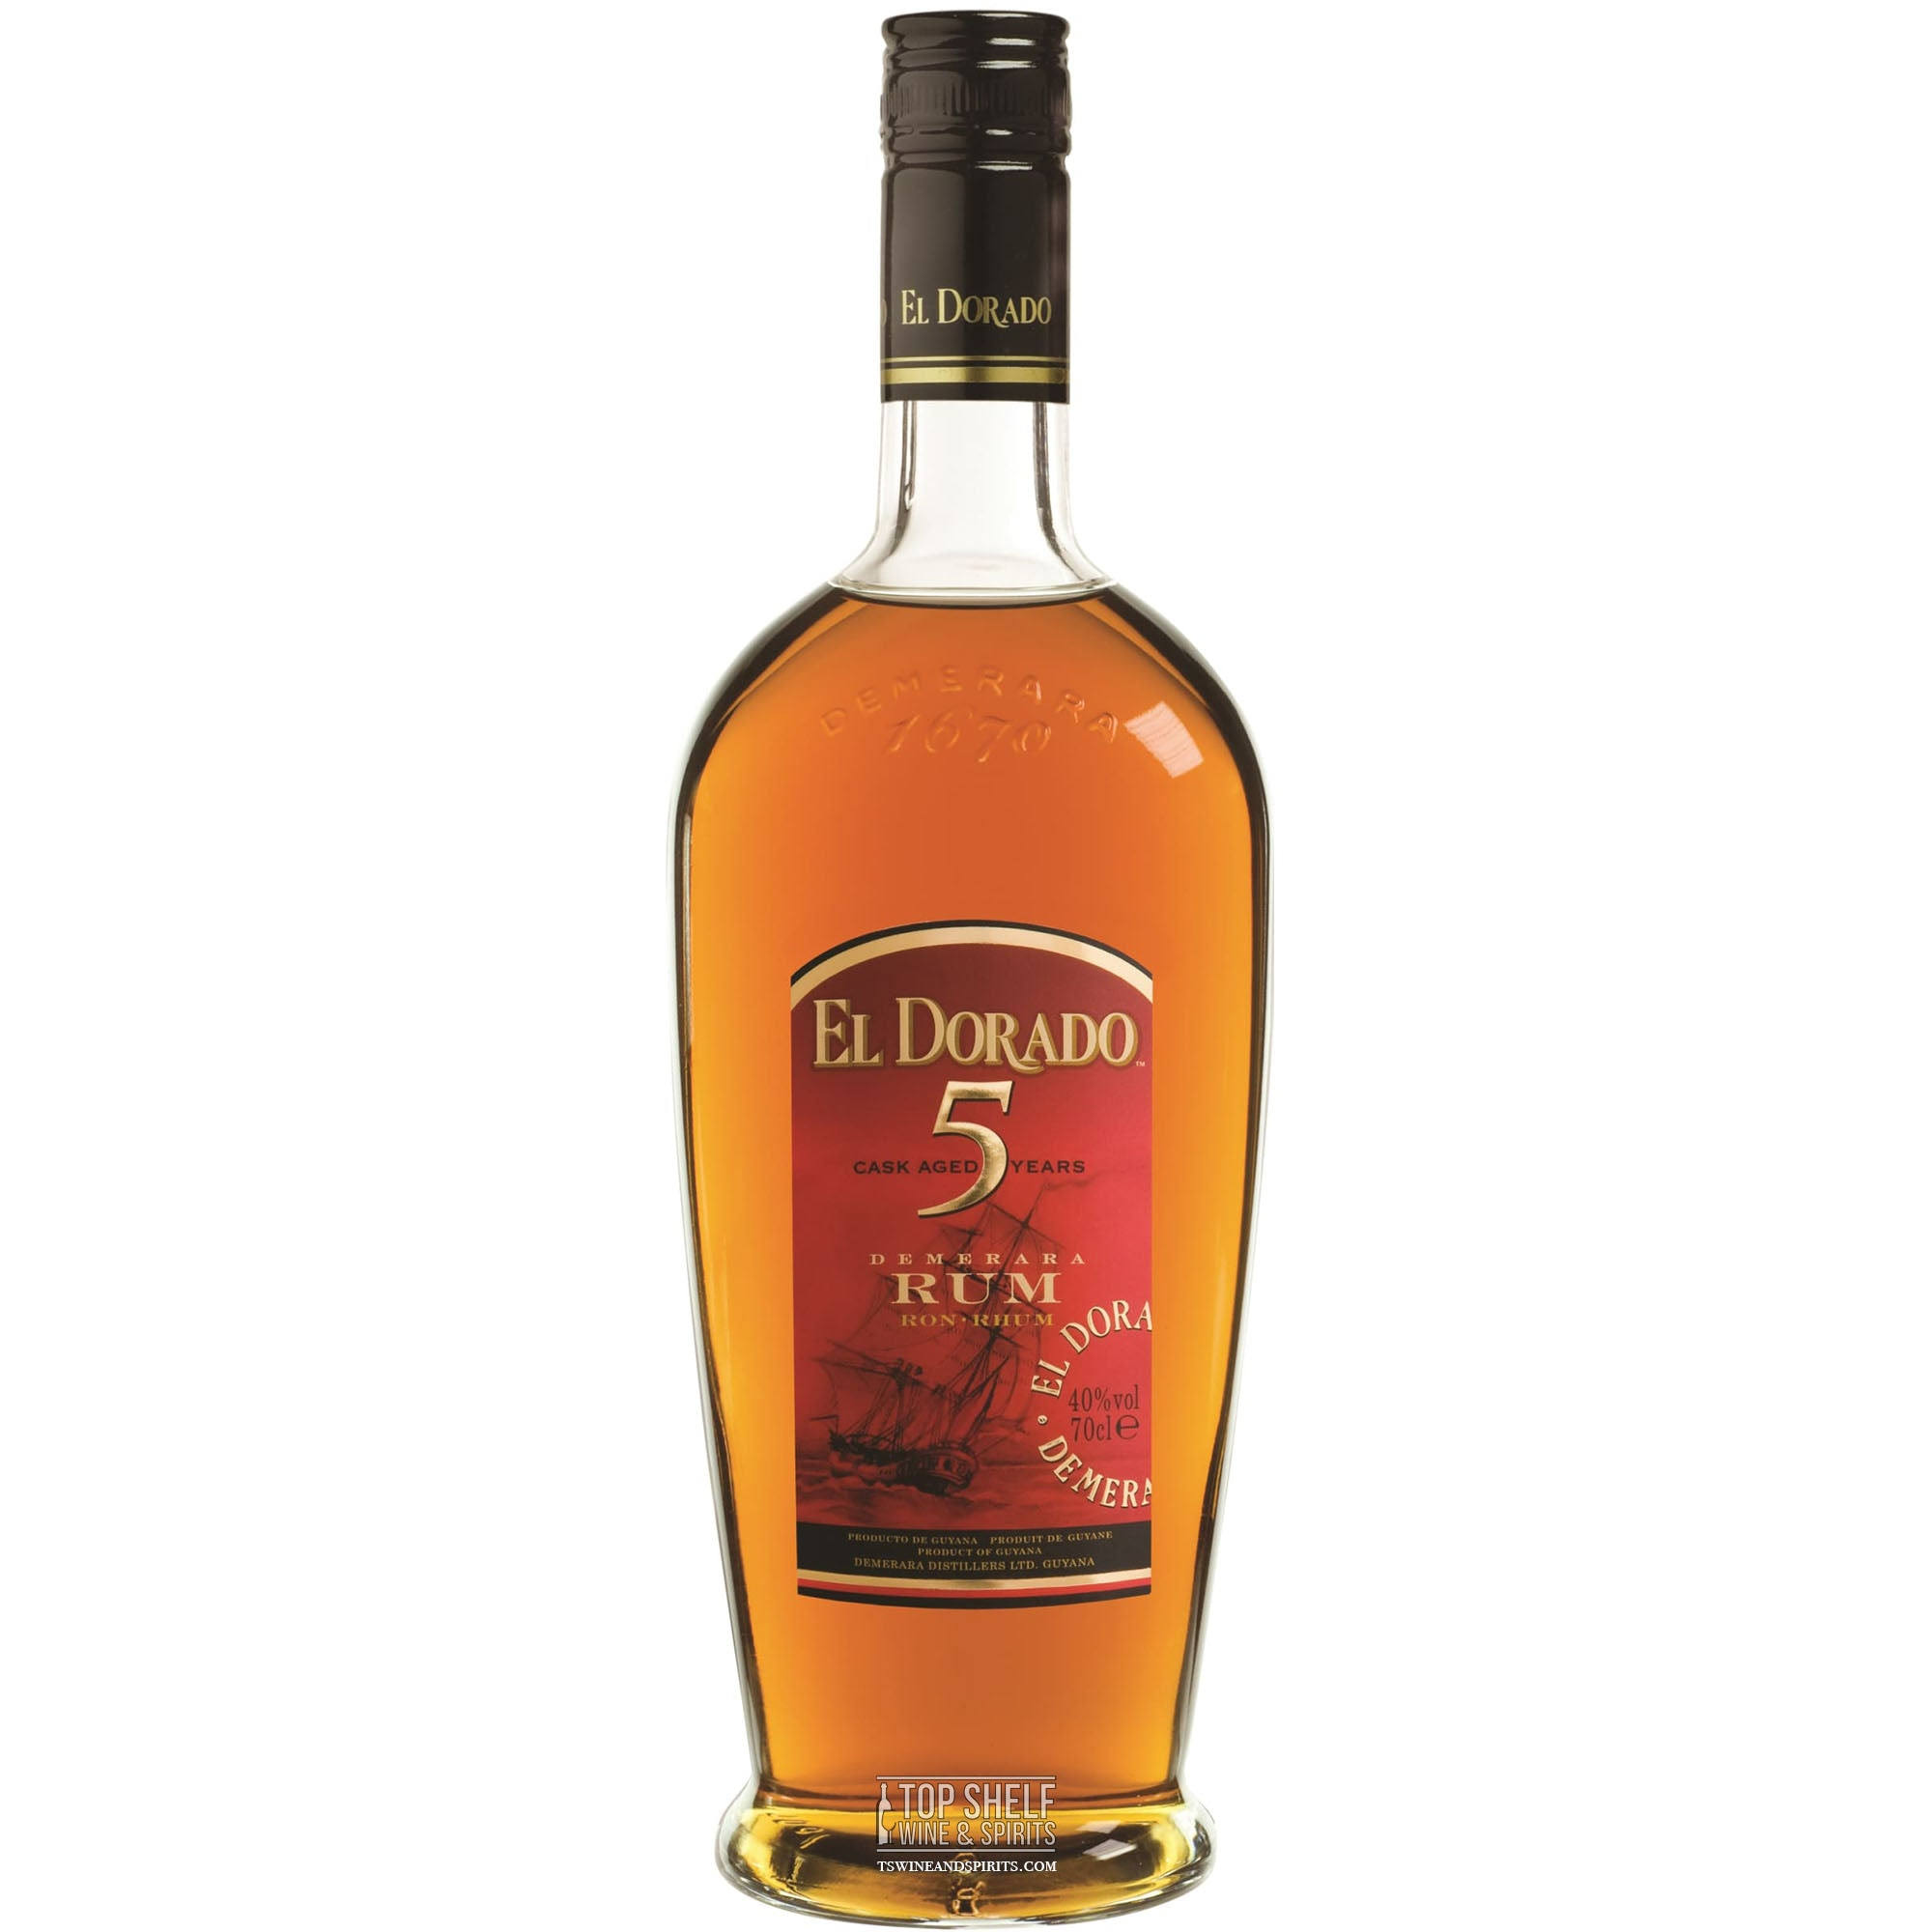 El Dorado 5 Year Old Rum - 750 ml bottle